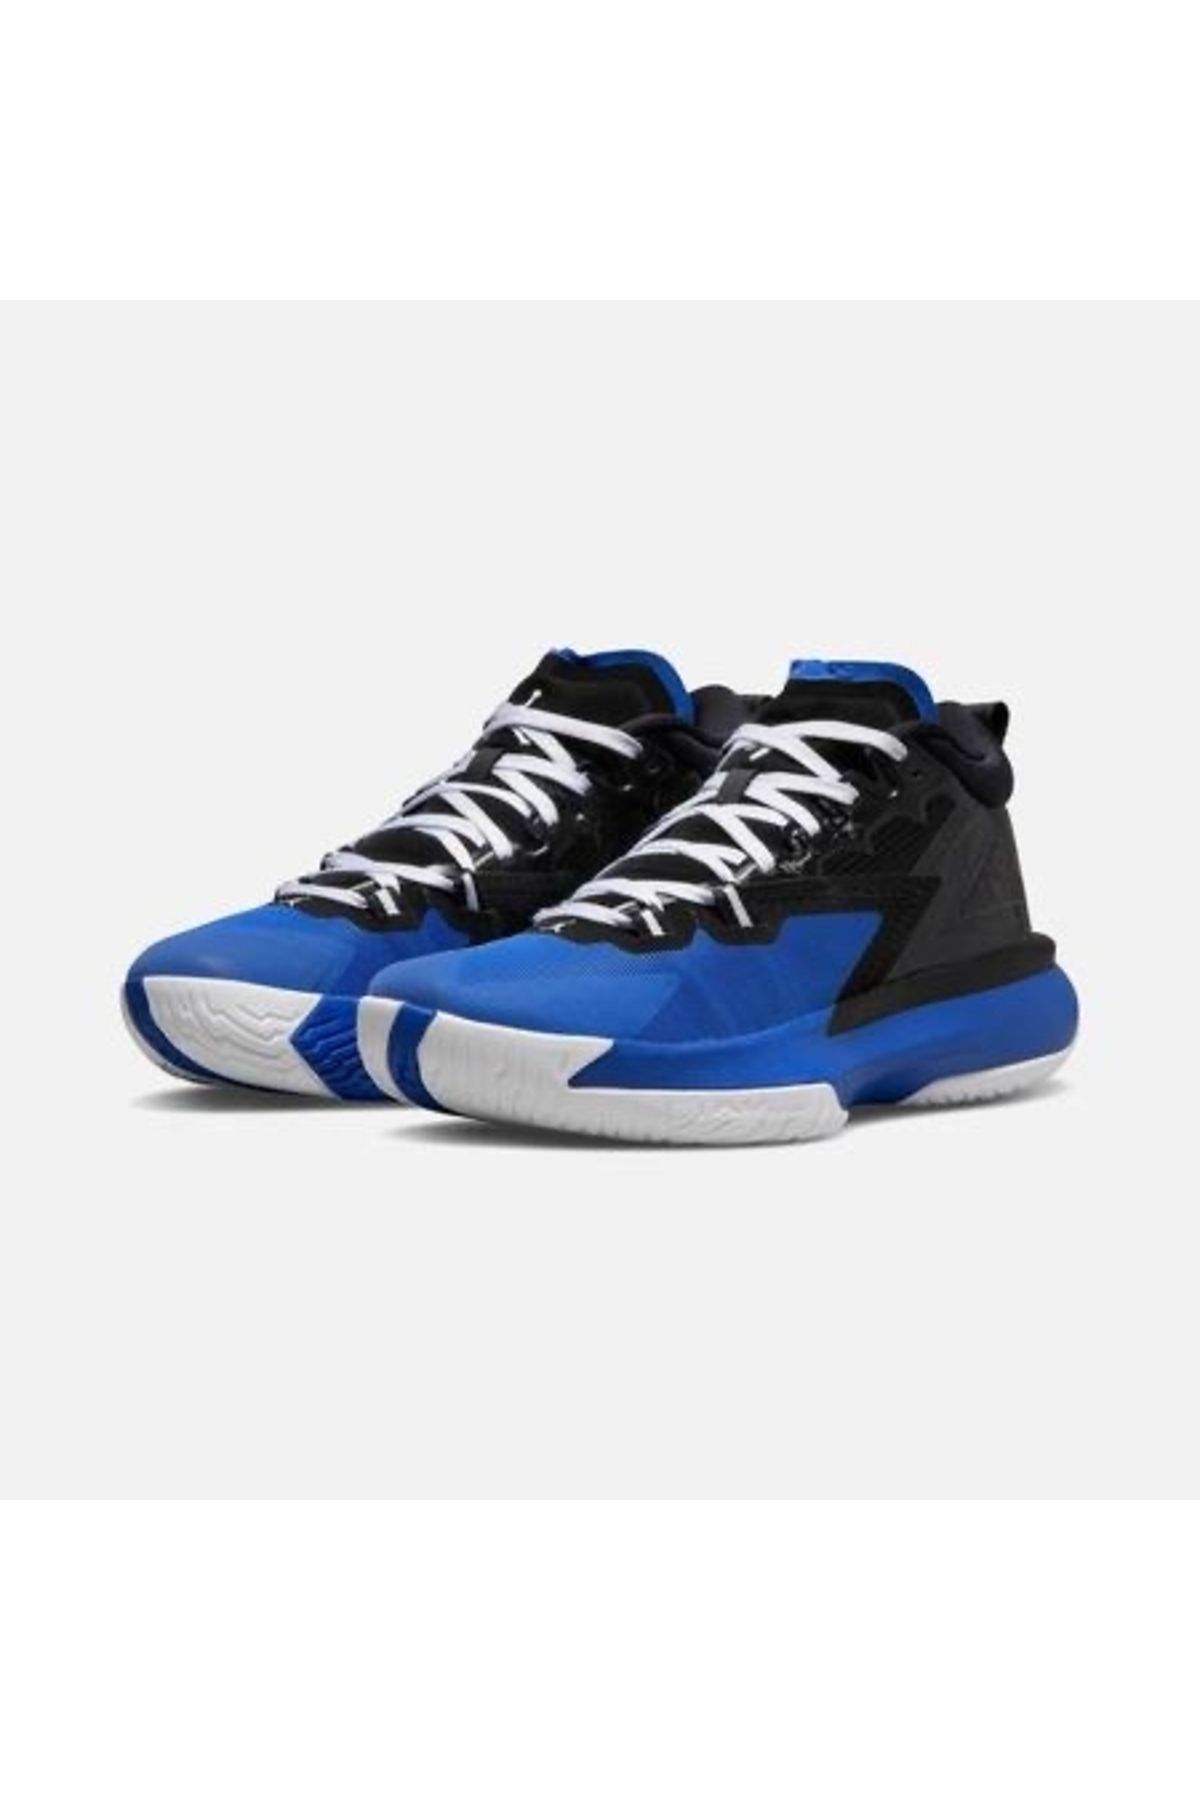 Nike Jordan Zion 1 DA3130 004